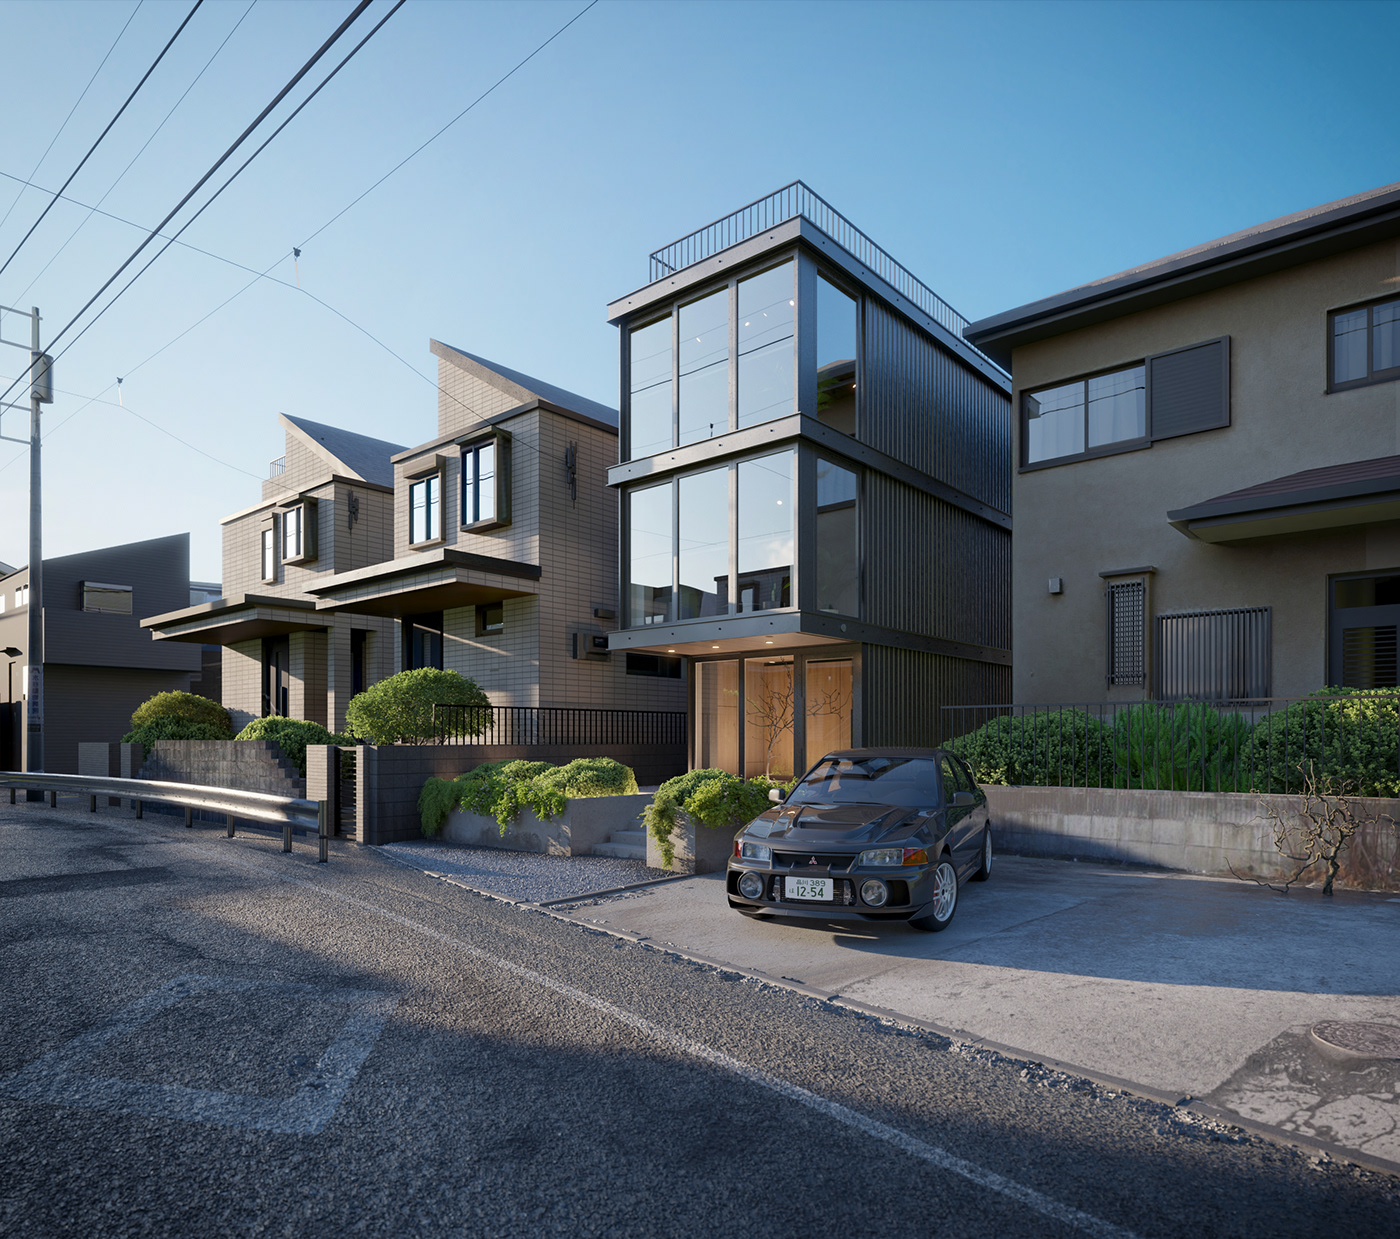 blender house Render 3D CGI architecture exterior archviz visualization japan